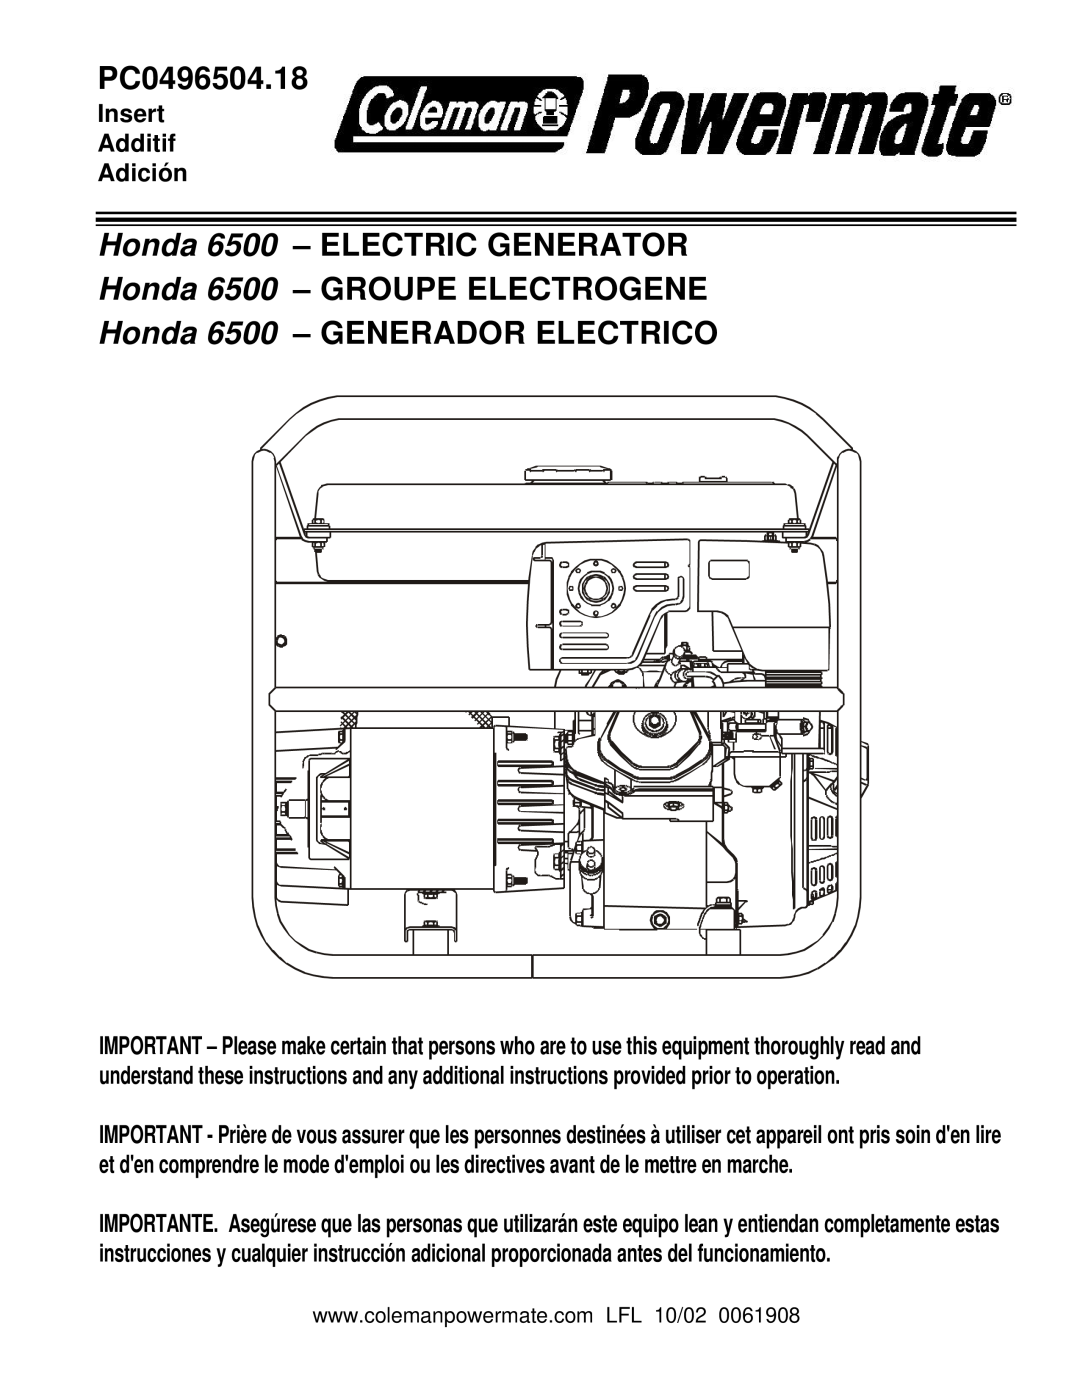 Powermate PC0496504.18 manual Honda 6500 - ELECTRIC GENERATOR Honda 6500 - GROUPE ELECTROGENE, Insert Additif Adición 